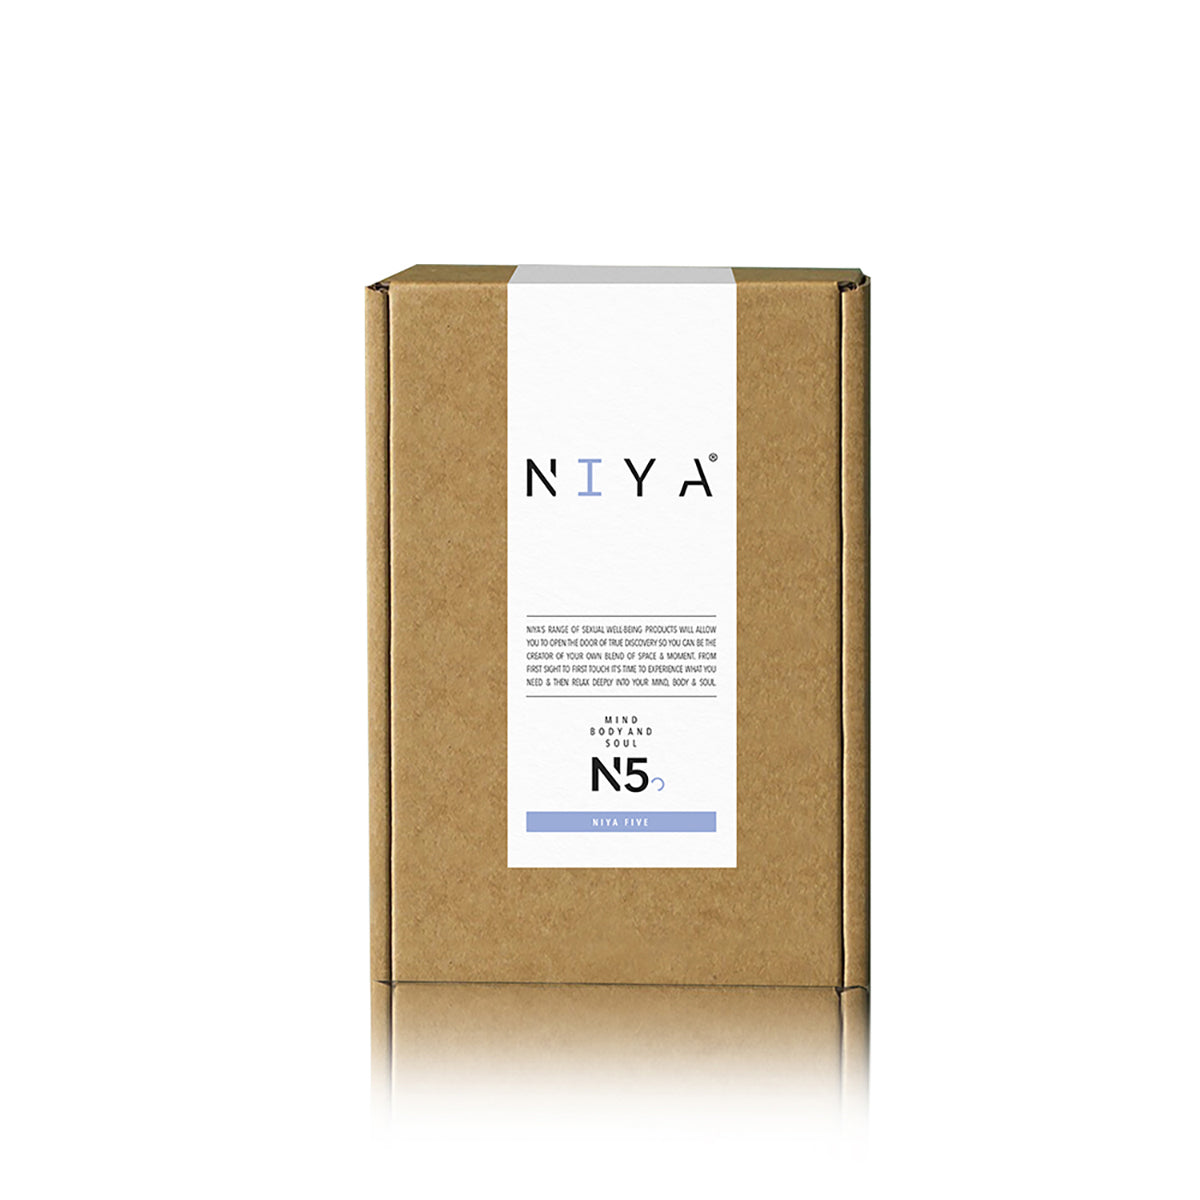 NIYA 5 For You, For Me, For Us Massager w/ Remote - Cornflower (Rebranded Packaging)